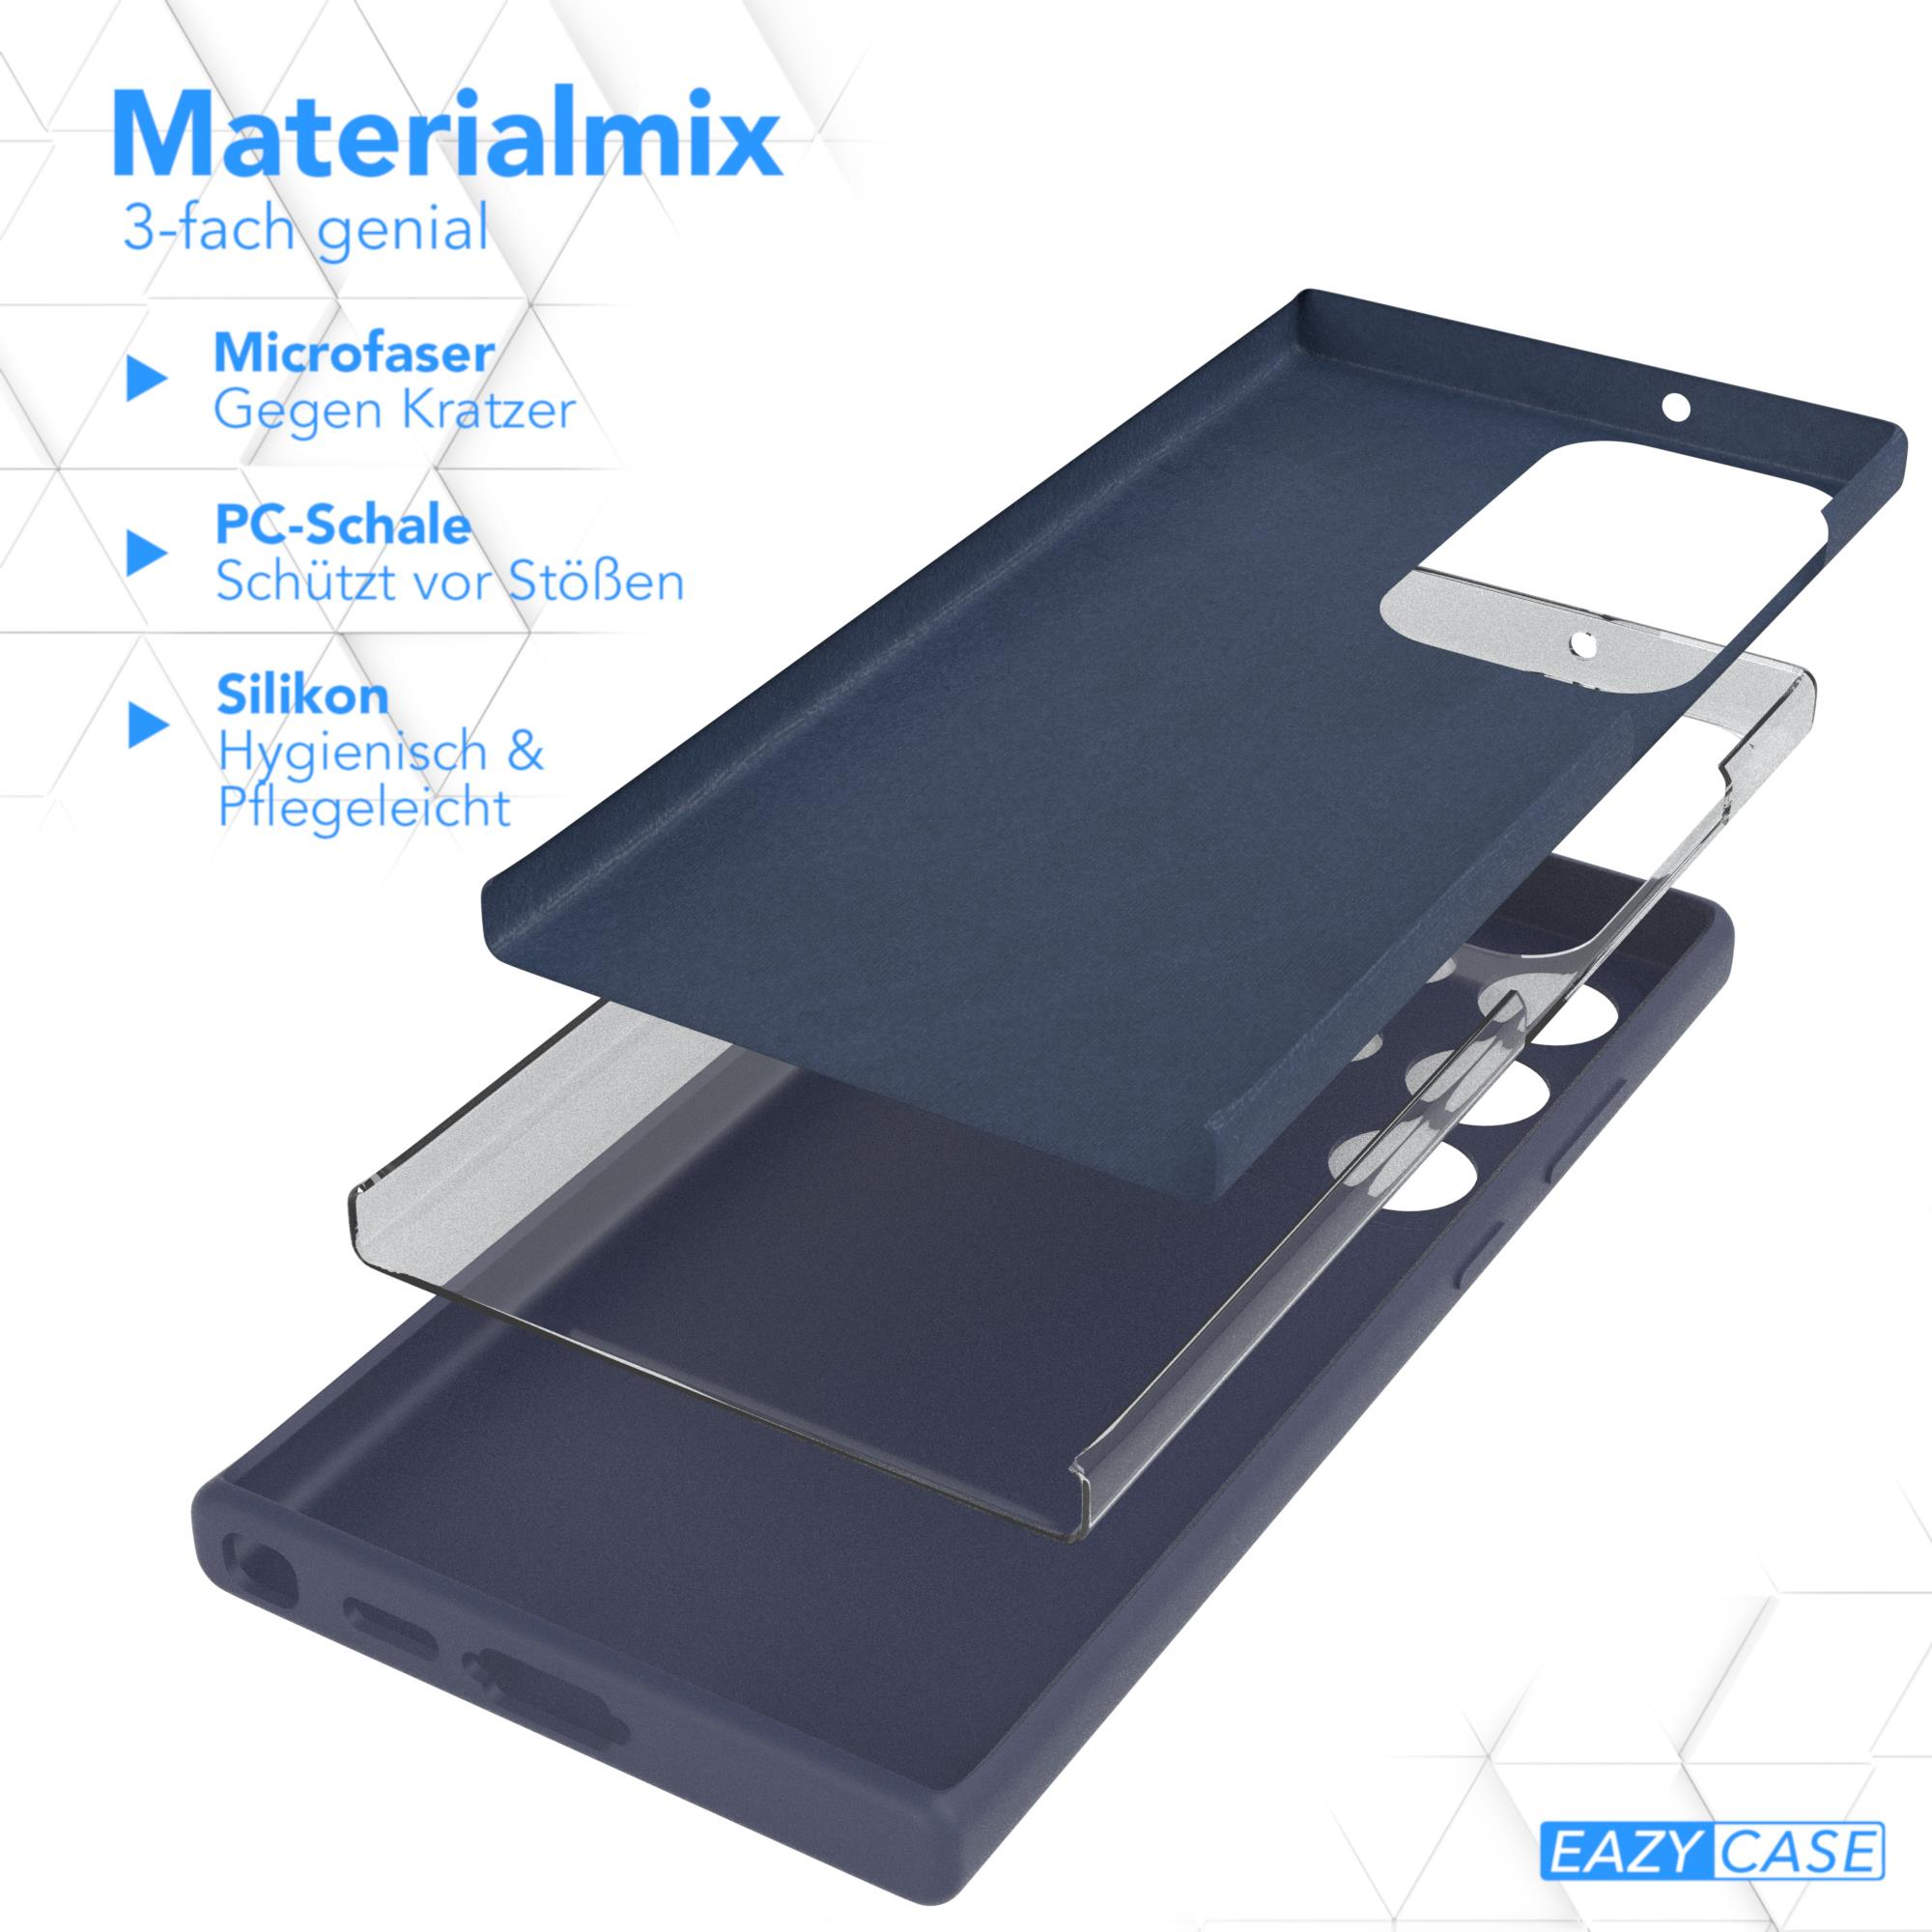 CASE Backcover, Samsung, / Handycase, Premium Nachtblau Ultra, S23 Galaxy EAZY Silikon Blau